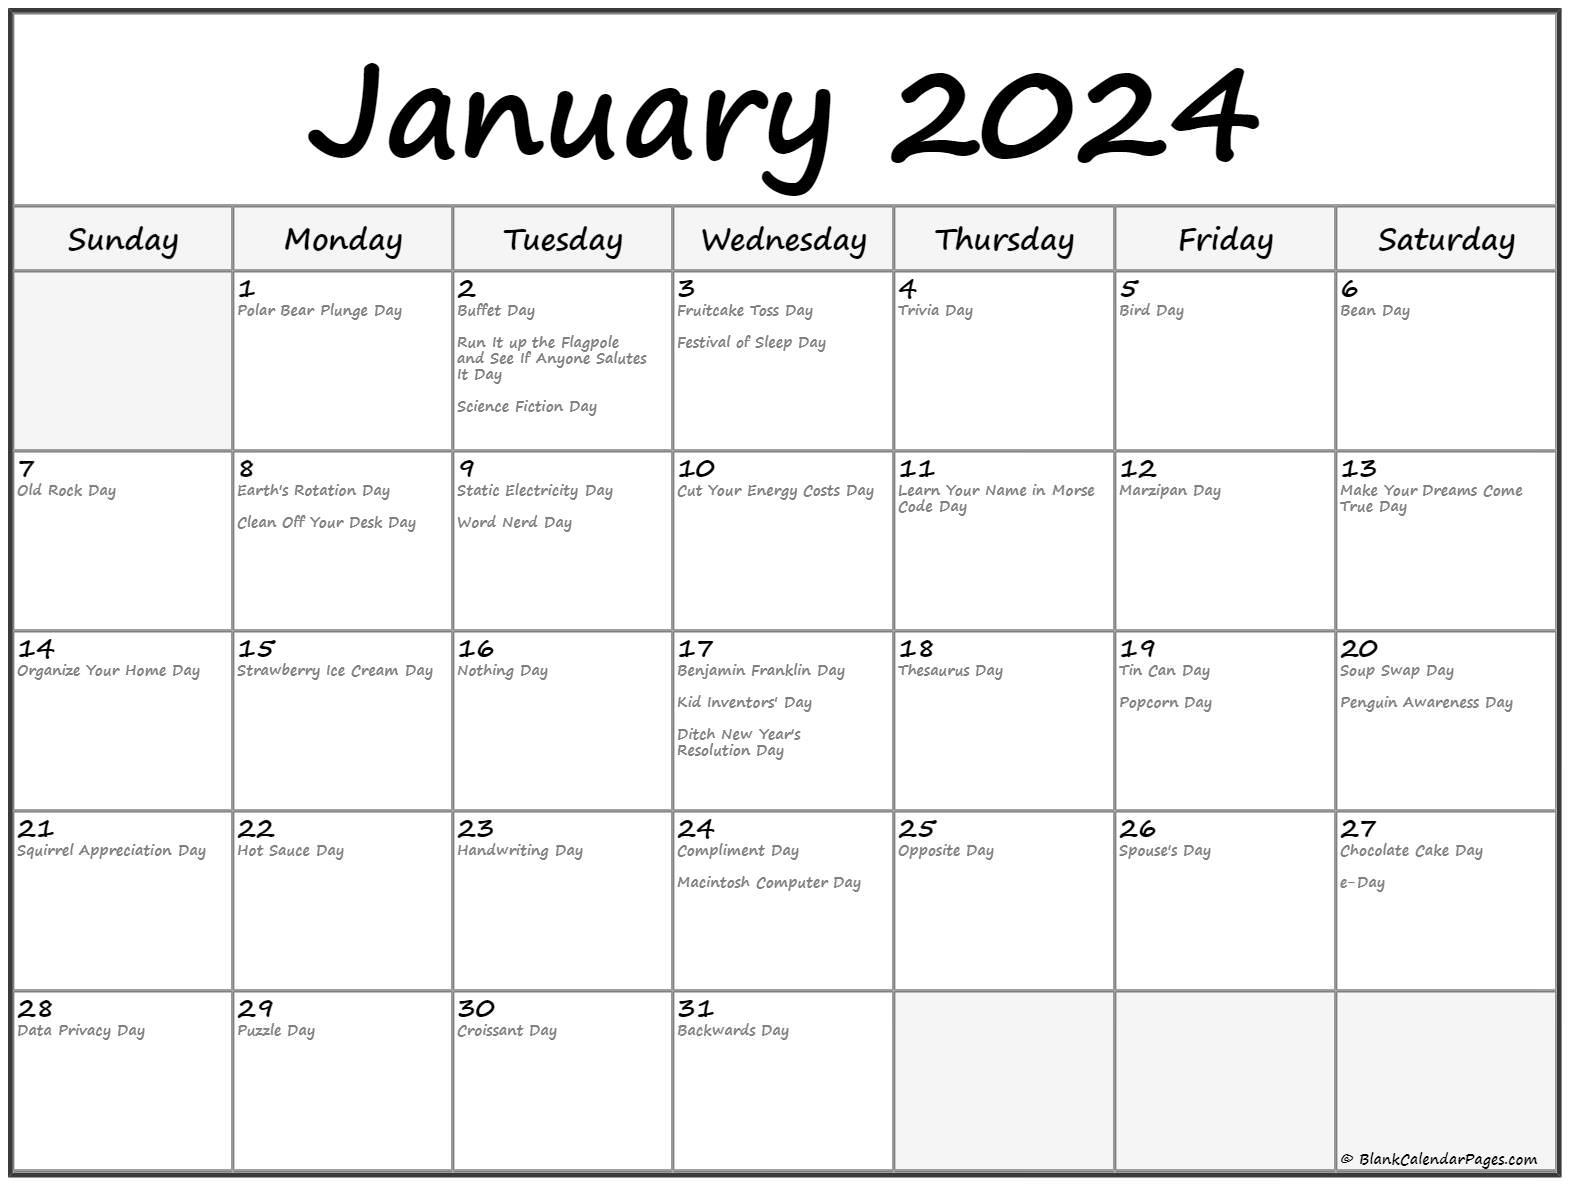 January 2021 Calendar With Holidays